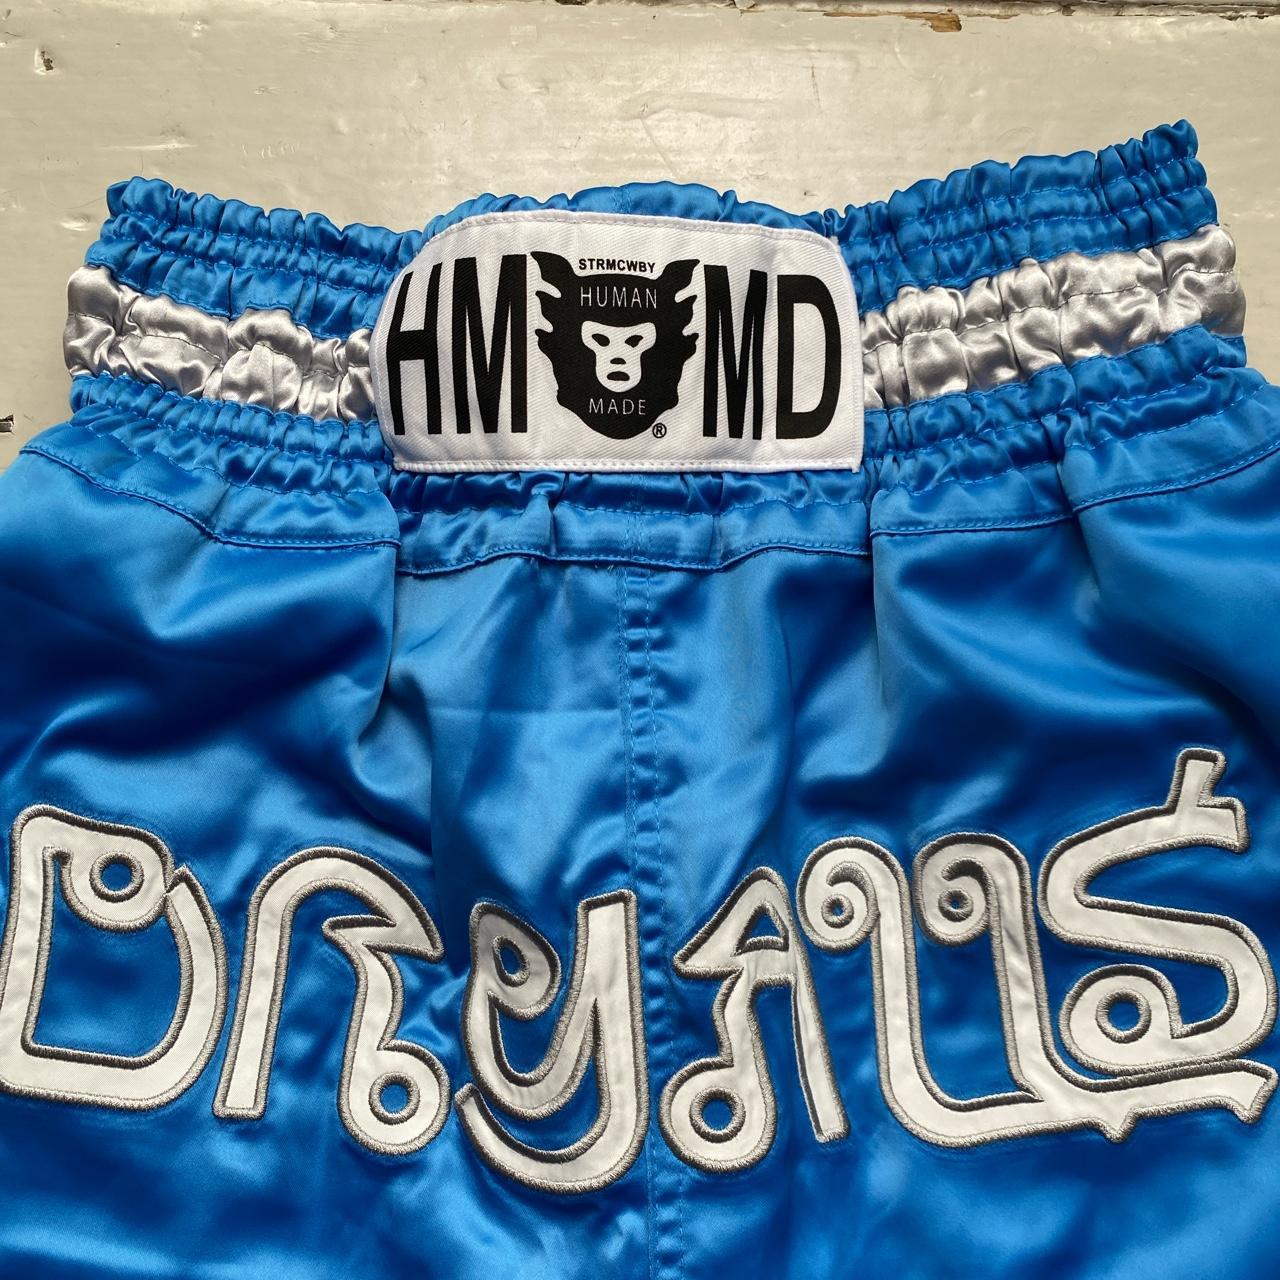 Human Made Muay Thai Blue and Silver Boxing Shorts